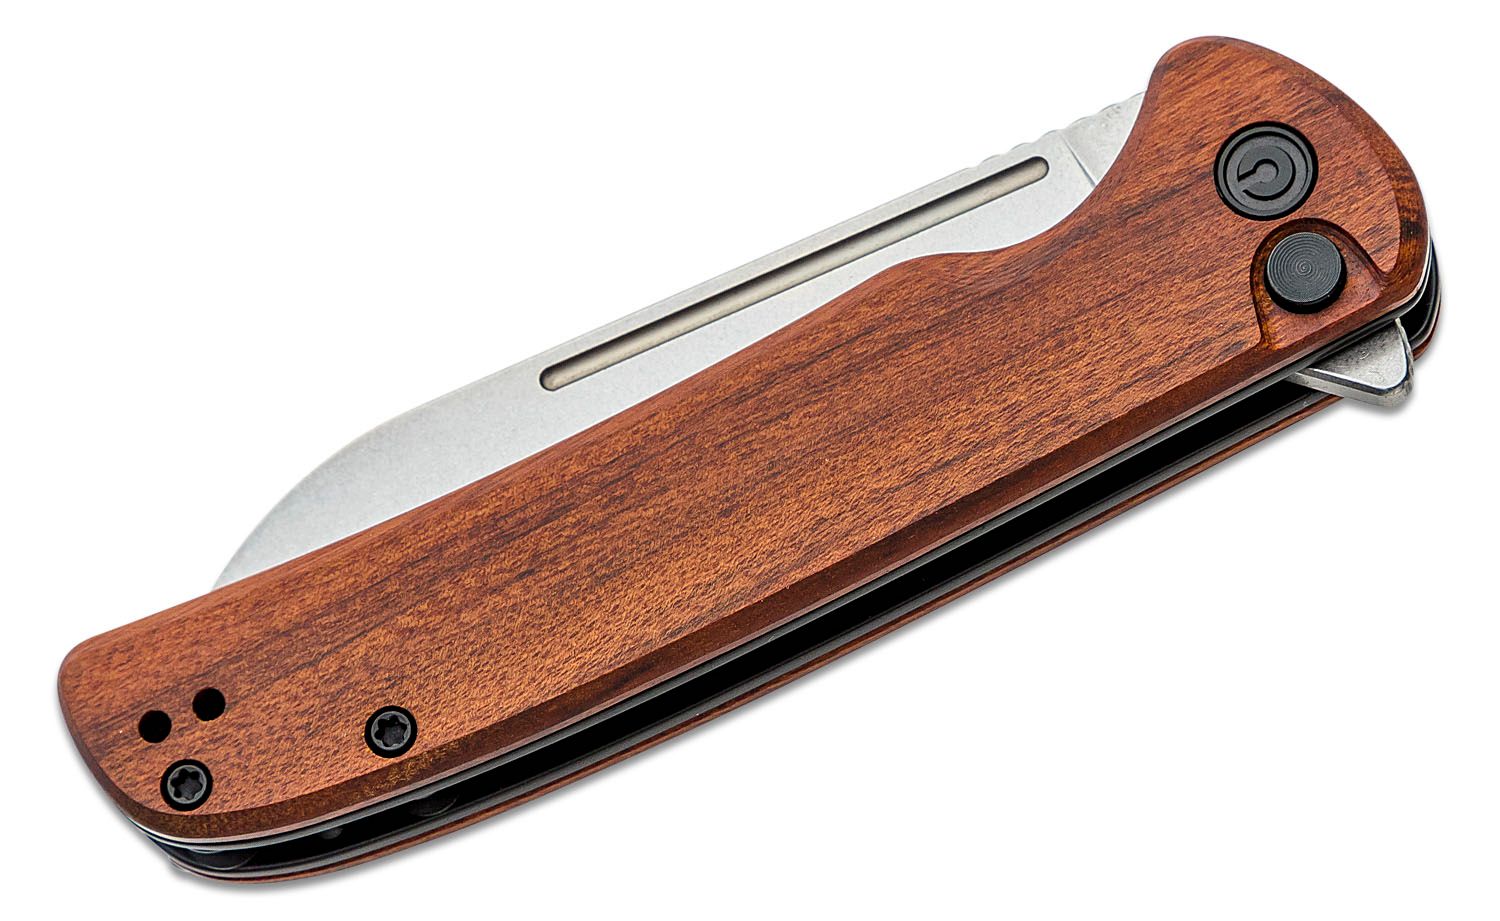 Civivi Knife on X: Three sharp CIVIVI knives all in one frame! 📸 Sleek,  Slim, and Always Ready✨ 👉🏻Spiny Dogfish (Liner Lock)-14C28N Blade  👉🏻Ki-V Plus (Nested Liner Lock)-Nitro-V Blade 👉🏻Foldis (Double Detent